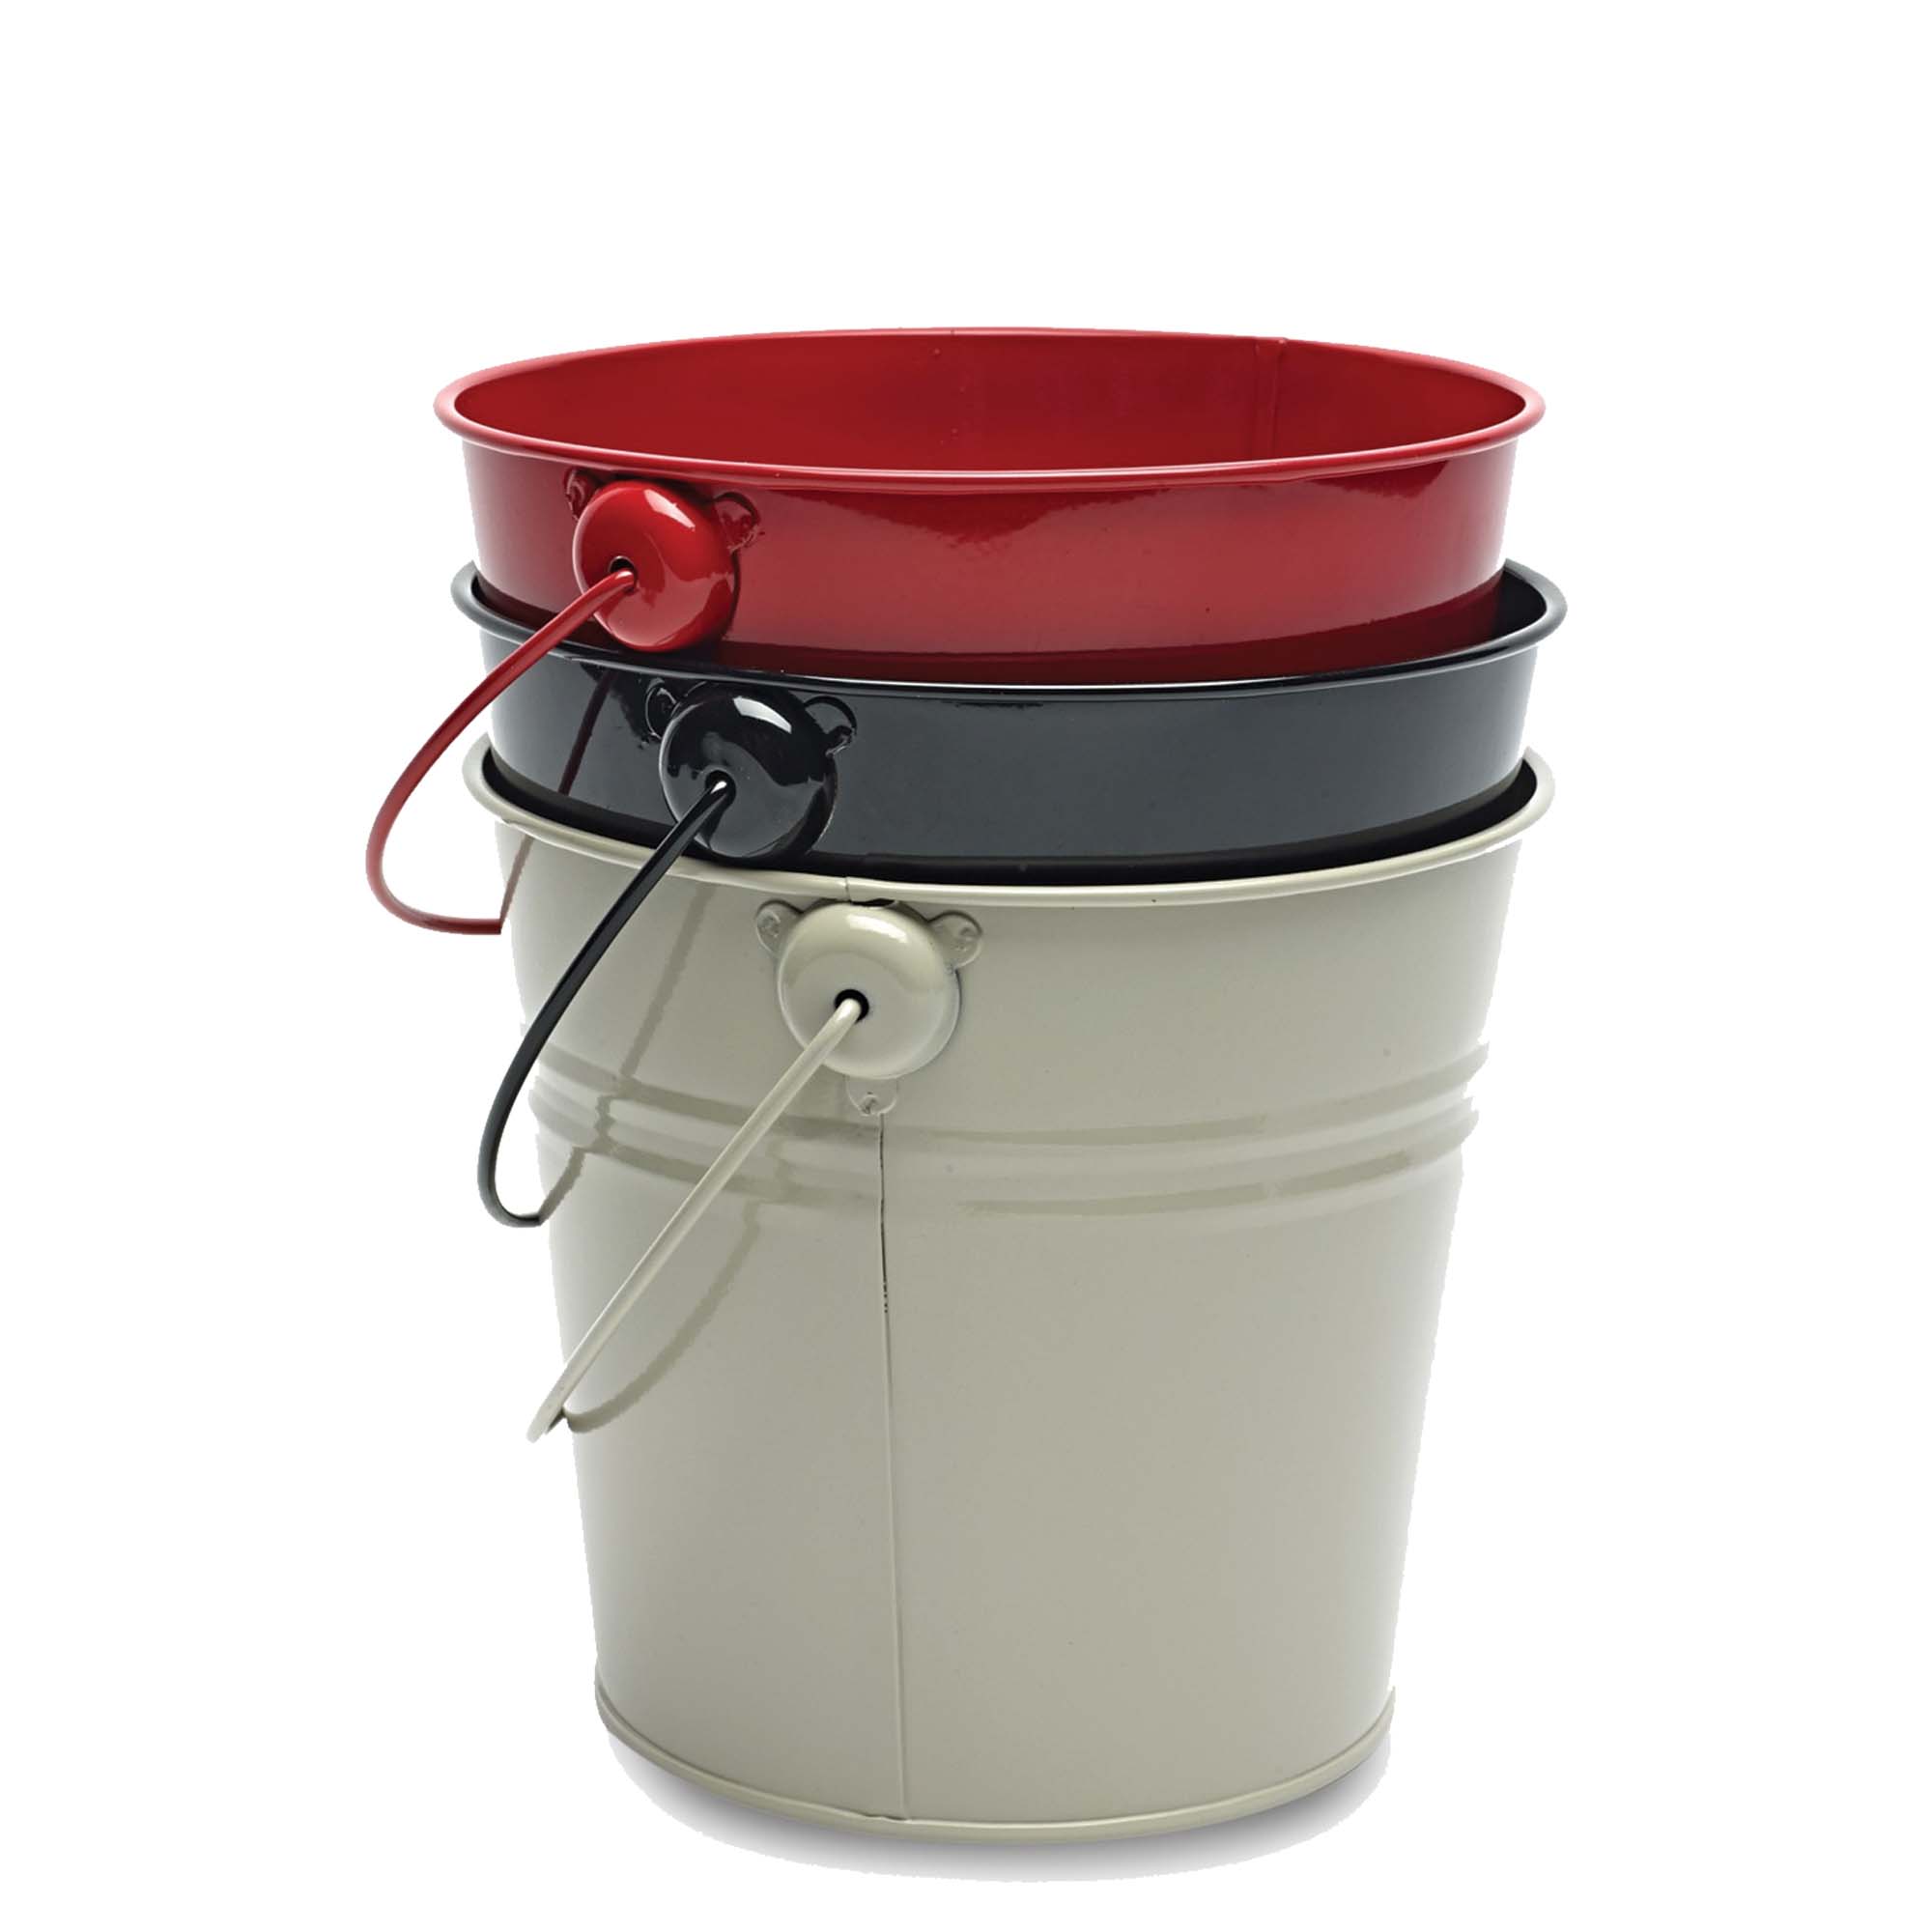 Promotional Arca galvanized bucket